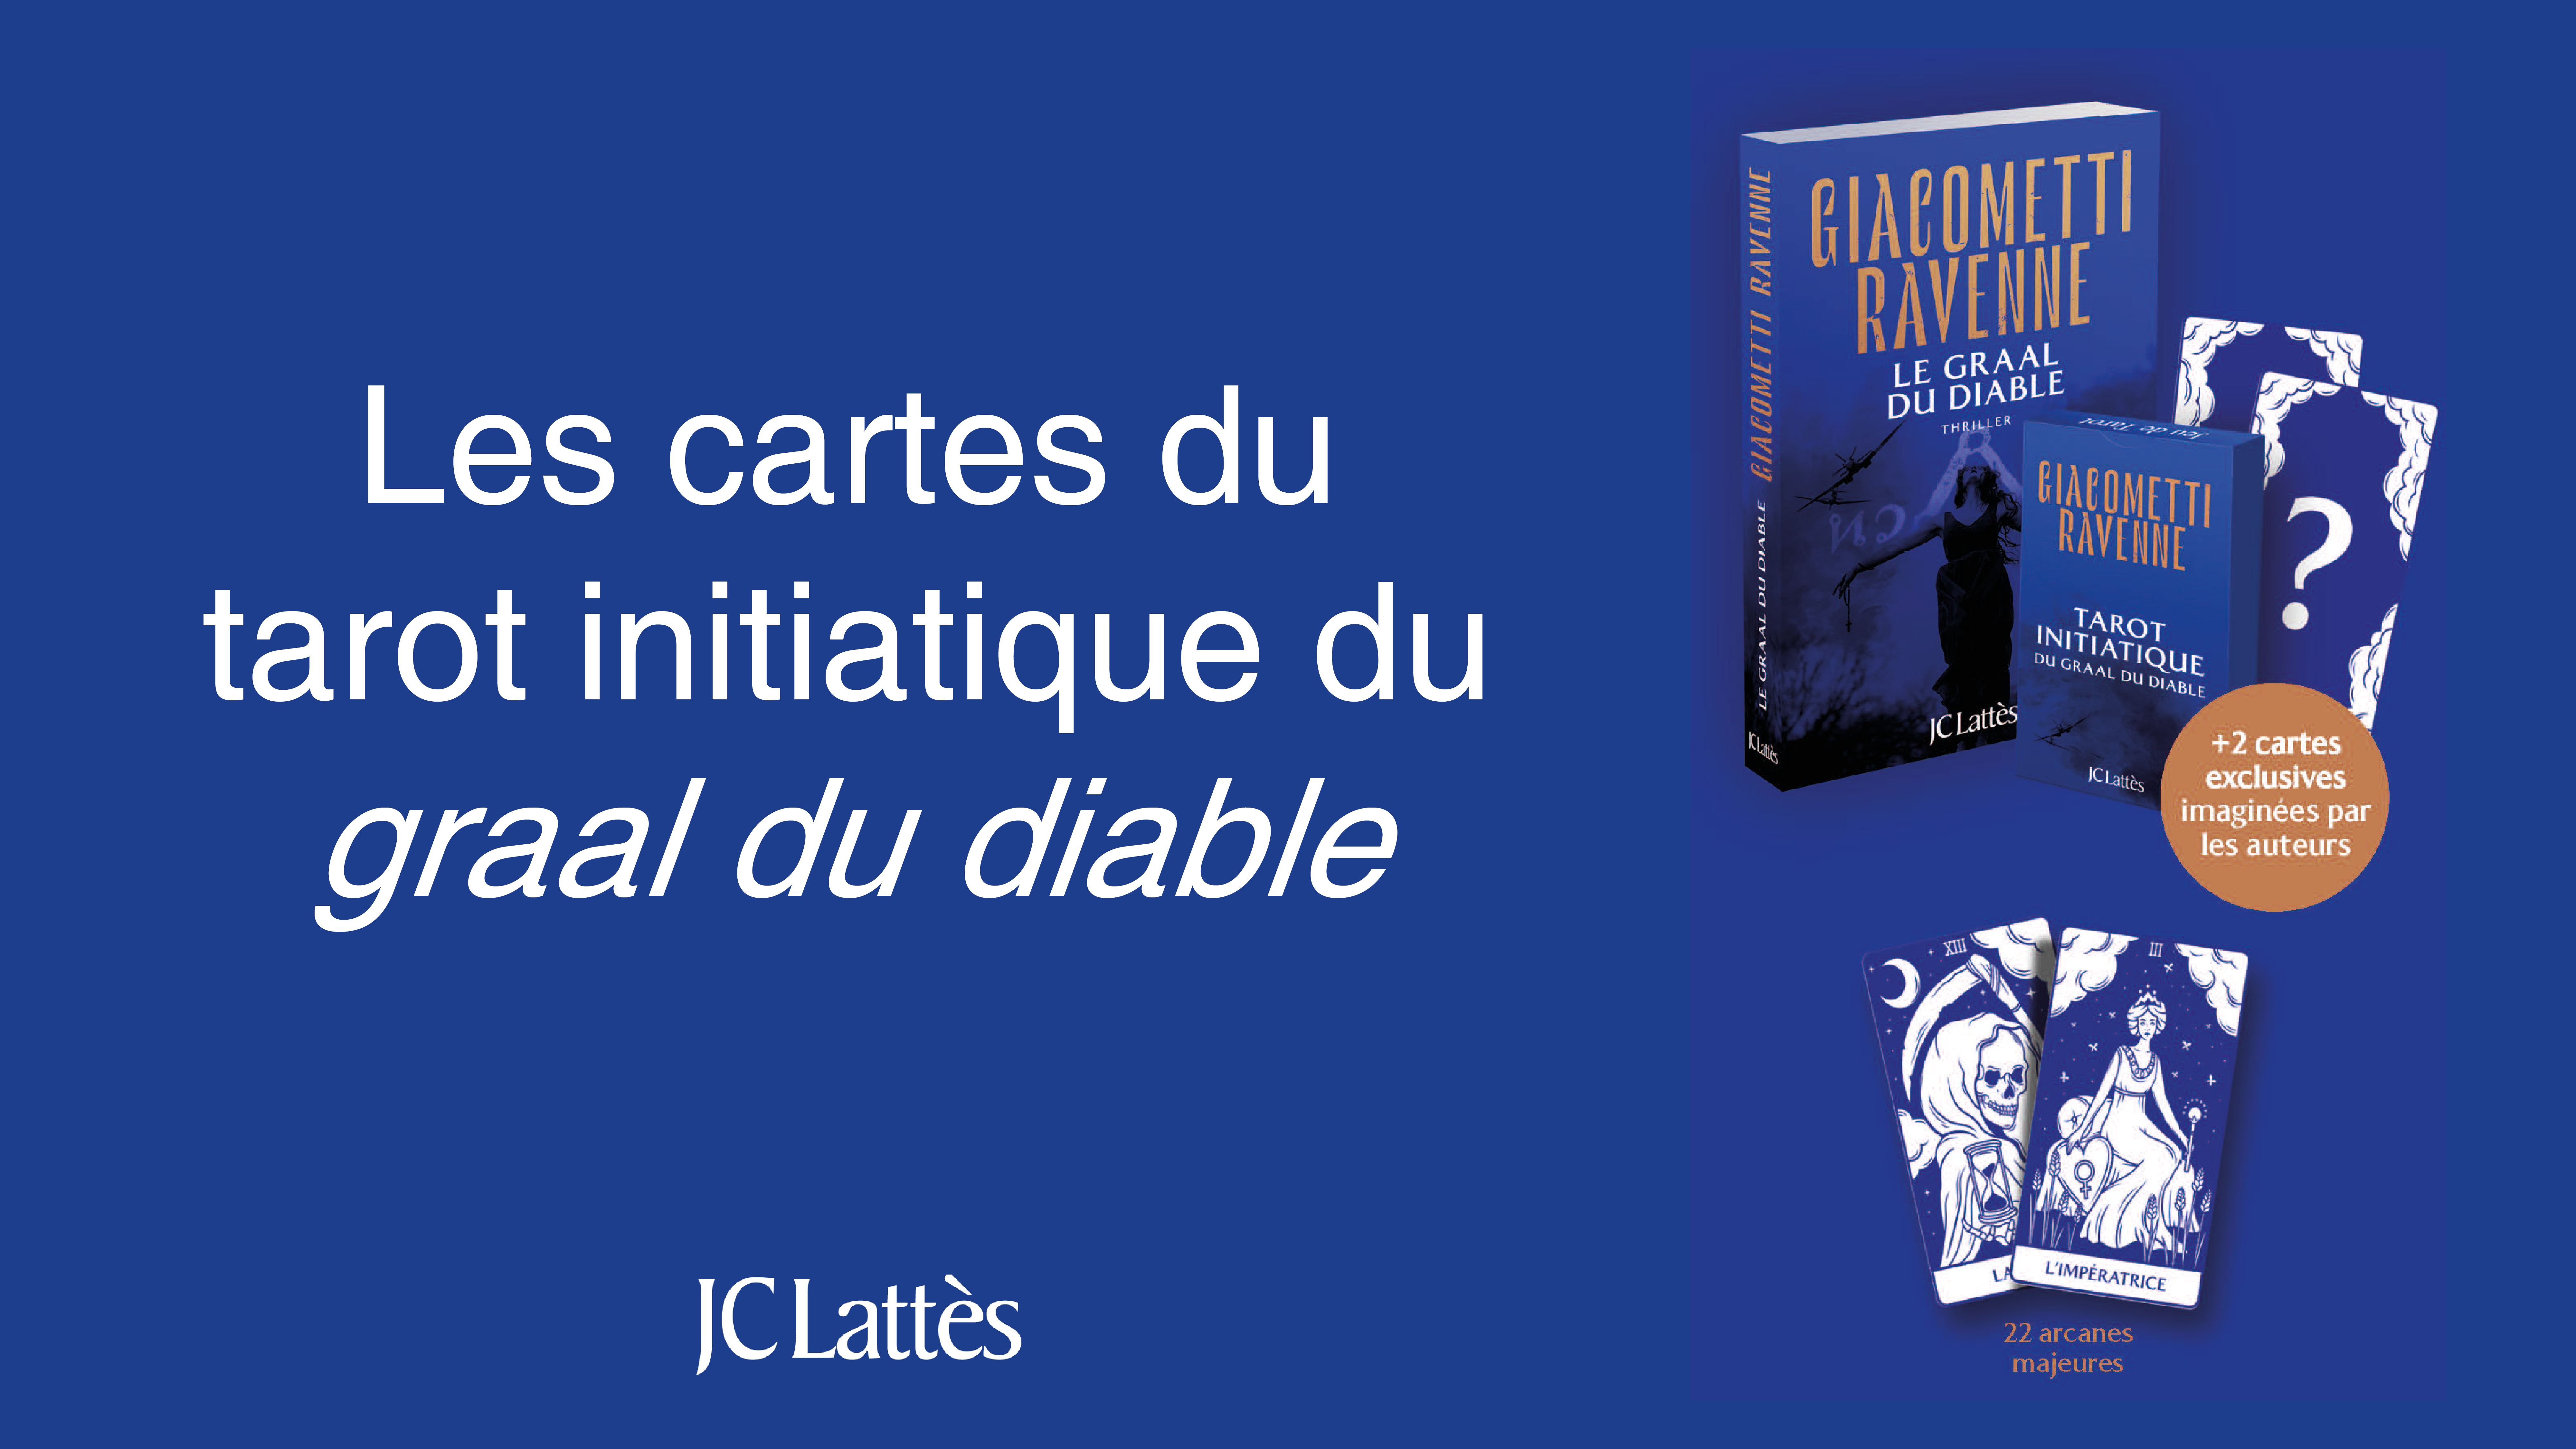 Tarot Le graal du diable - JC Lattès